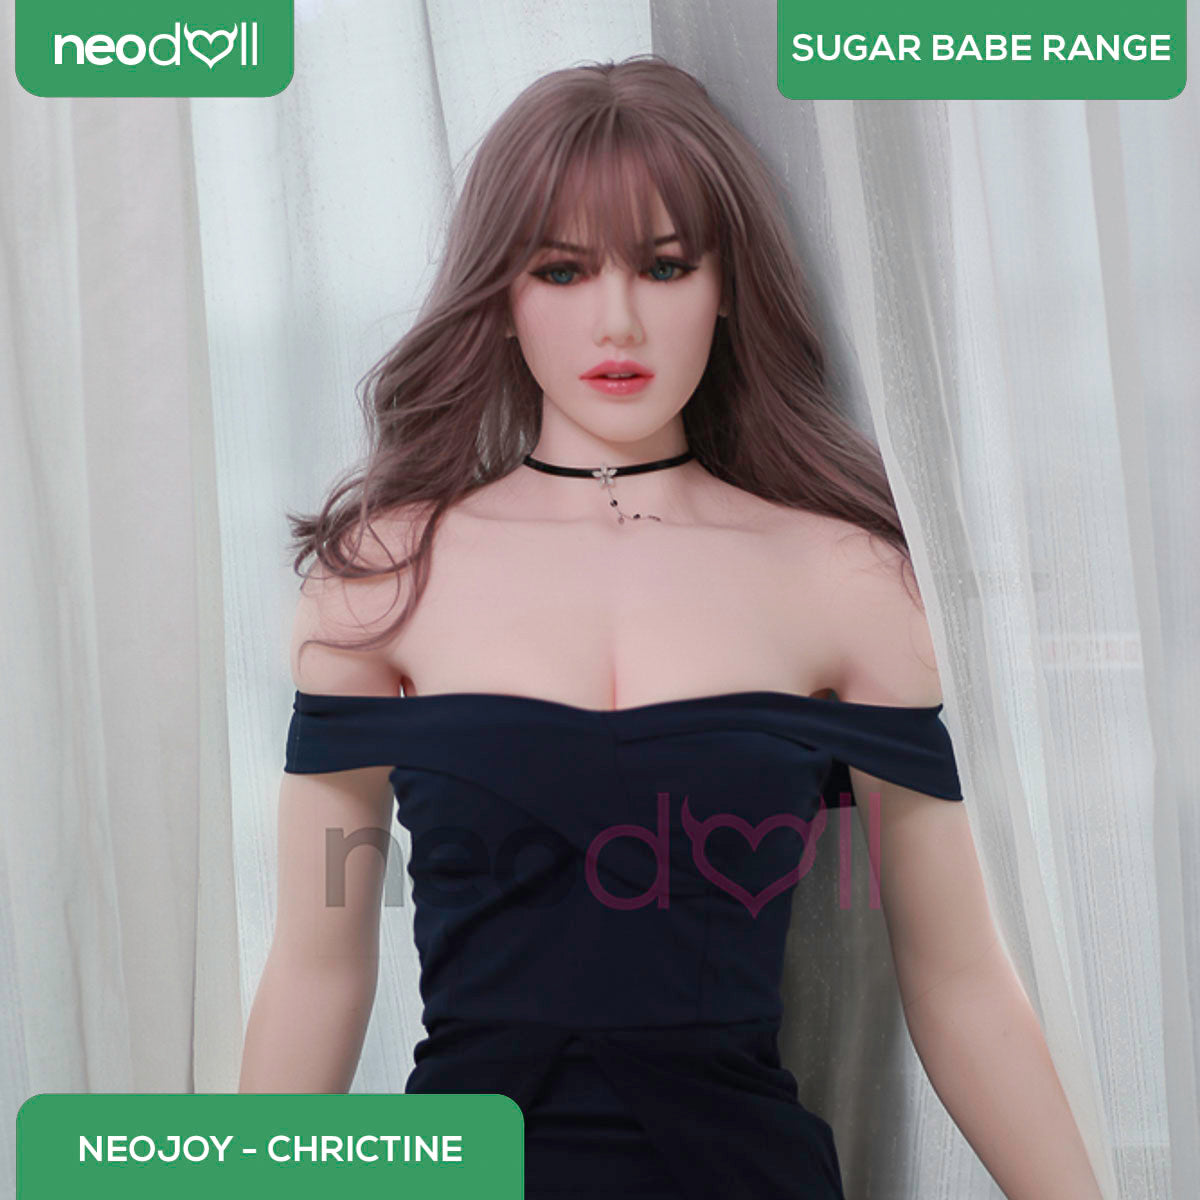 Sex Doll Chrictine | 175cm Height | Natural Skin | Shrug & Standing & Uterus & Gel Breast | Neodoll Sugar Babe